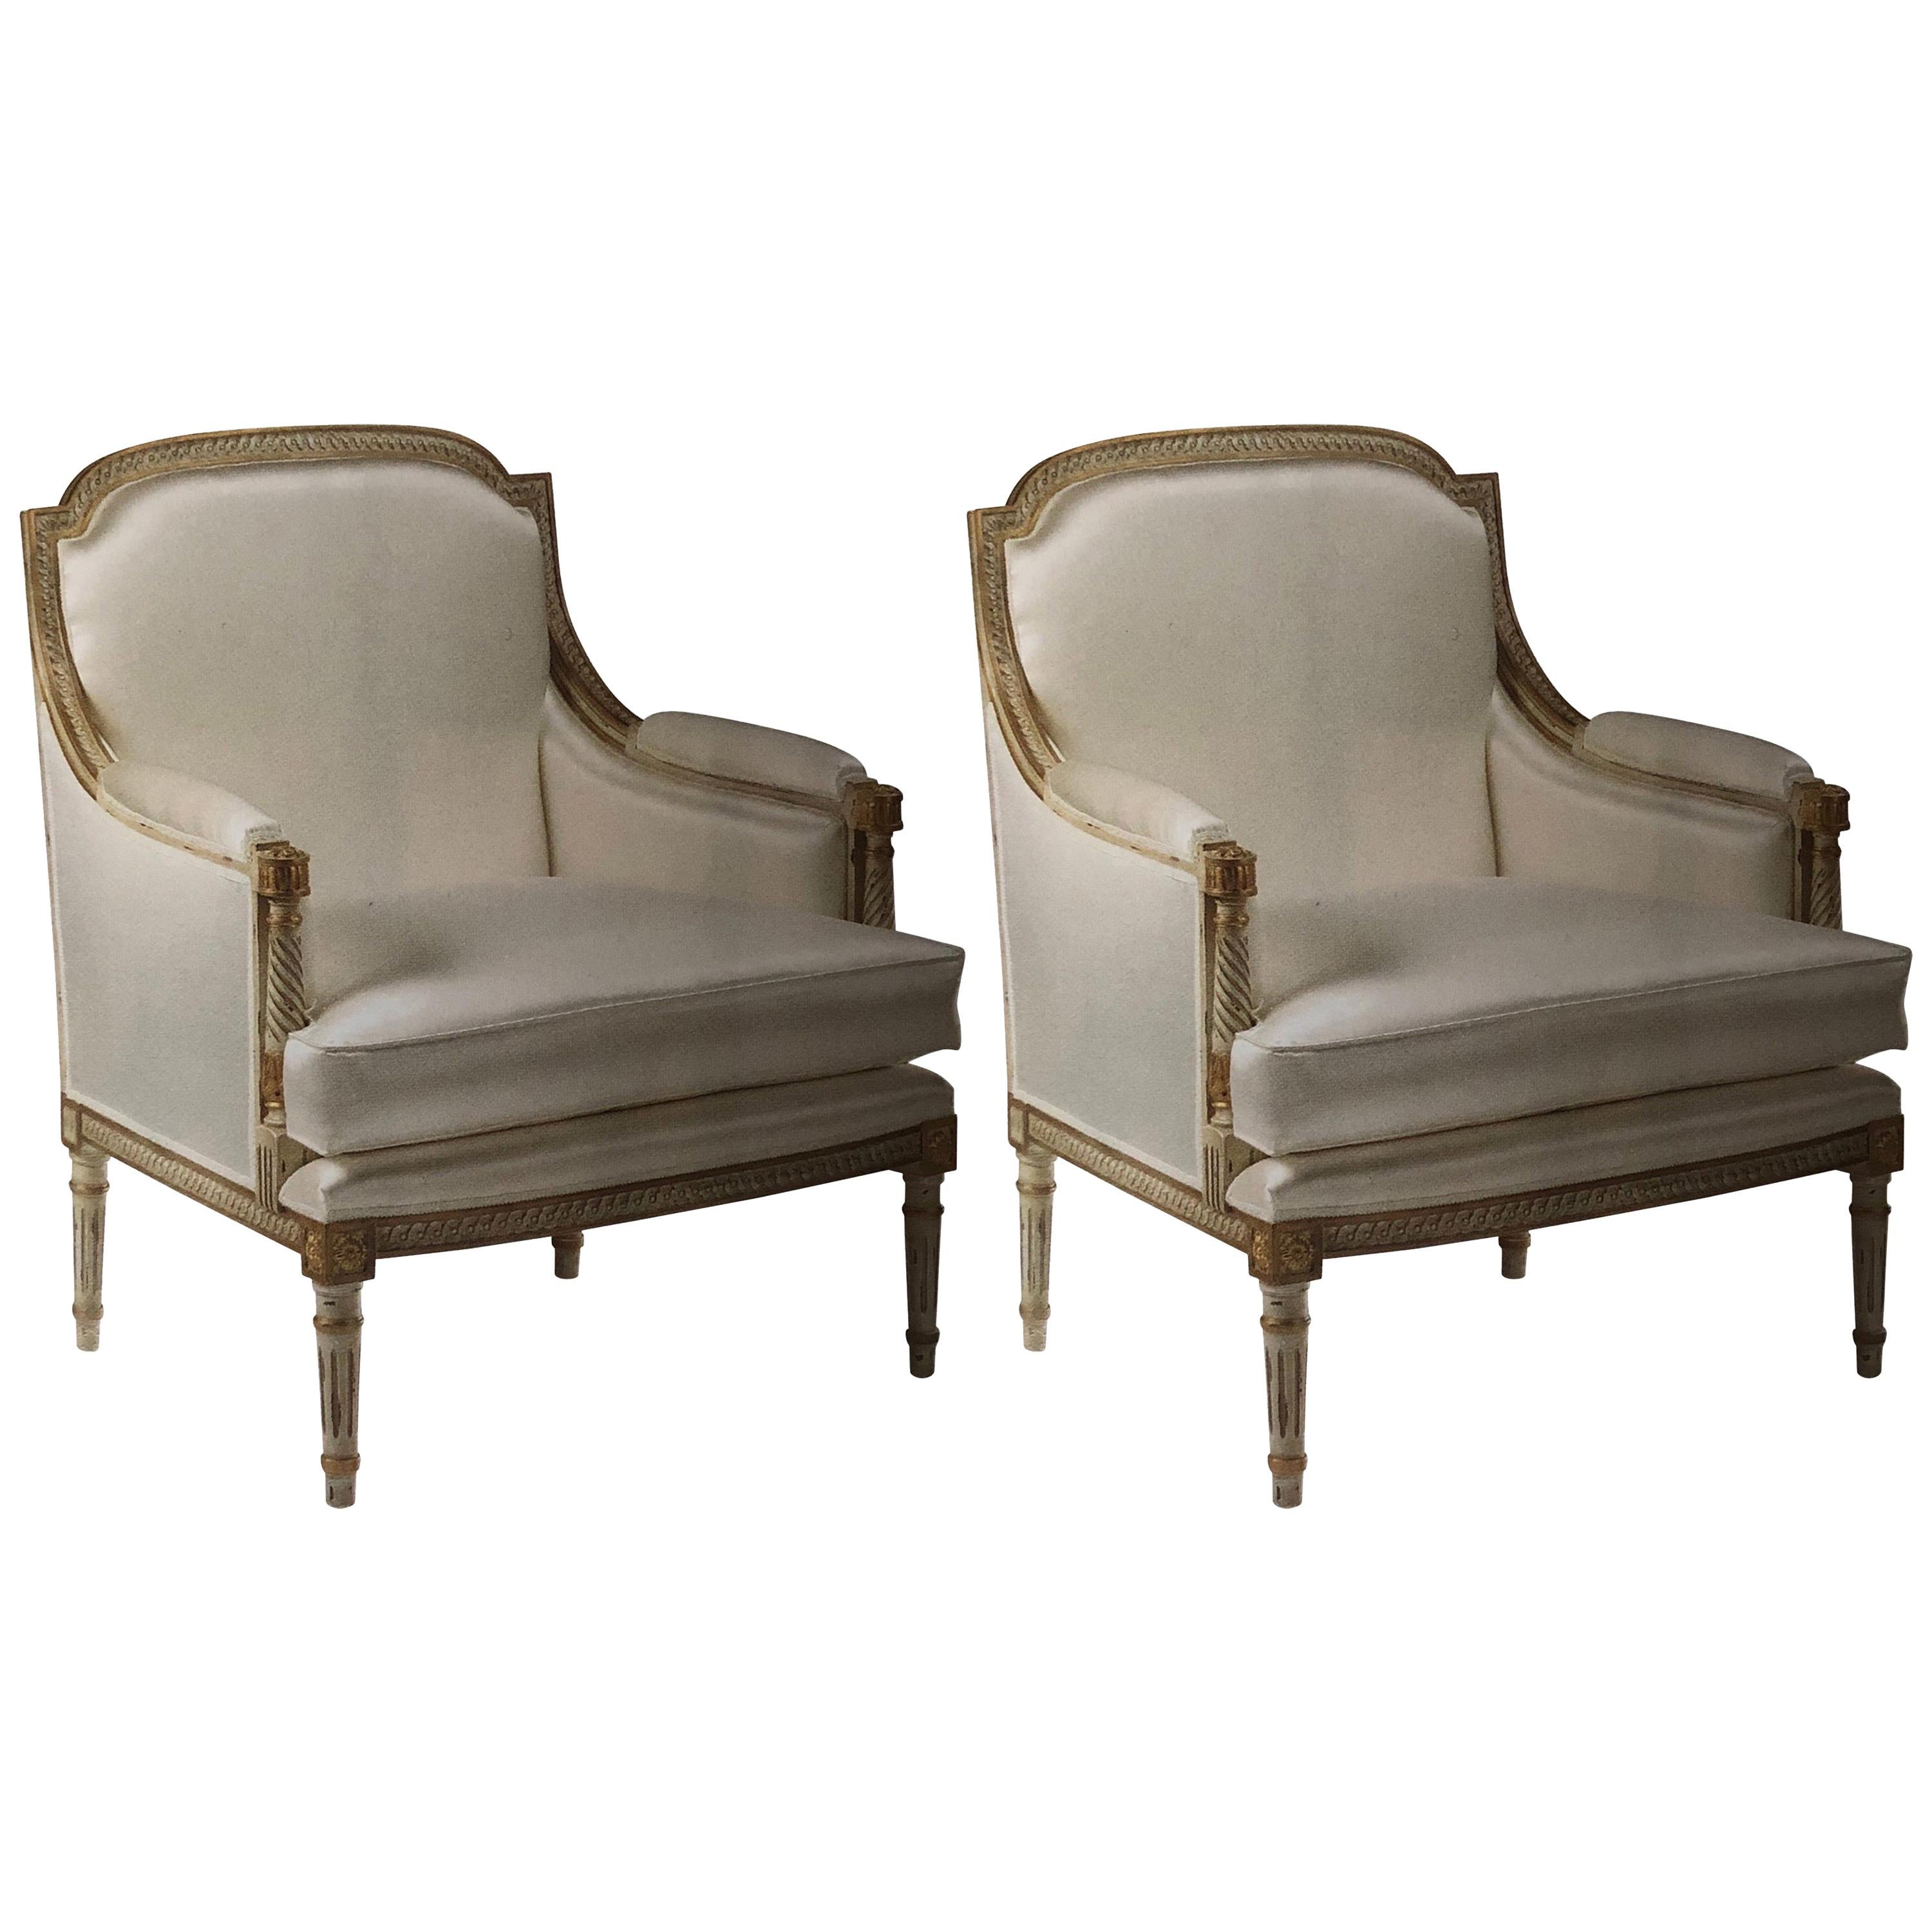 Pair of Italian Modern Neoclassical Louis XVI Style Lounge Chairs, Maison Jansen